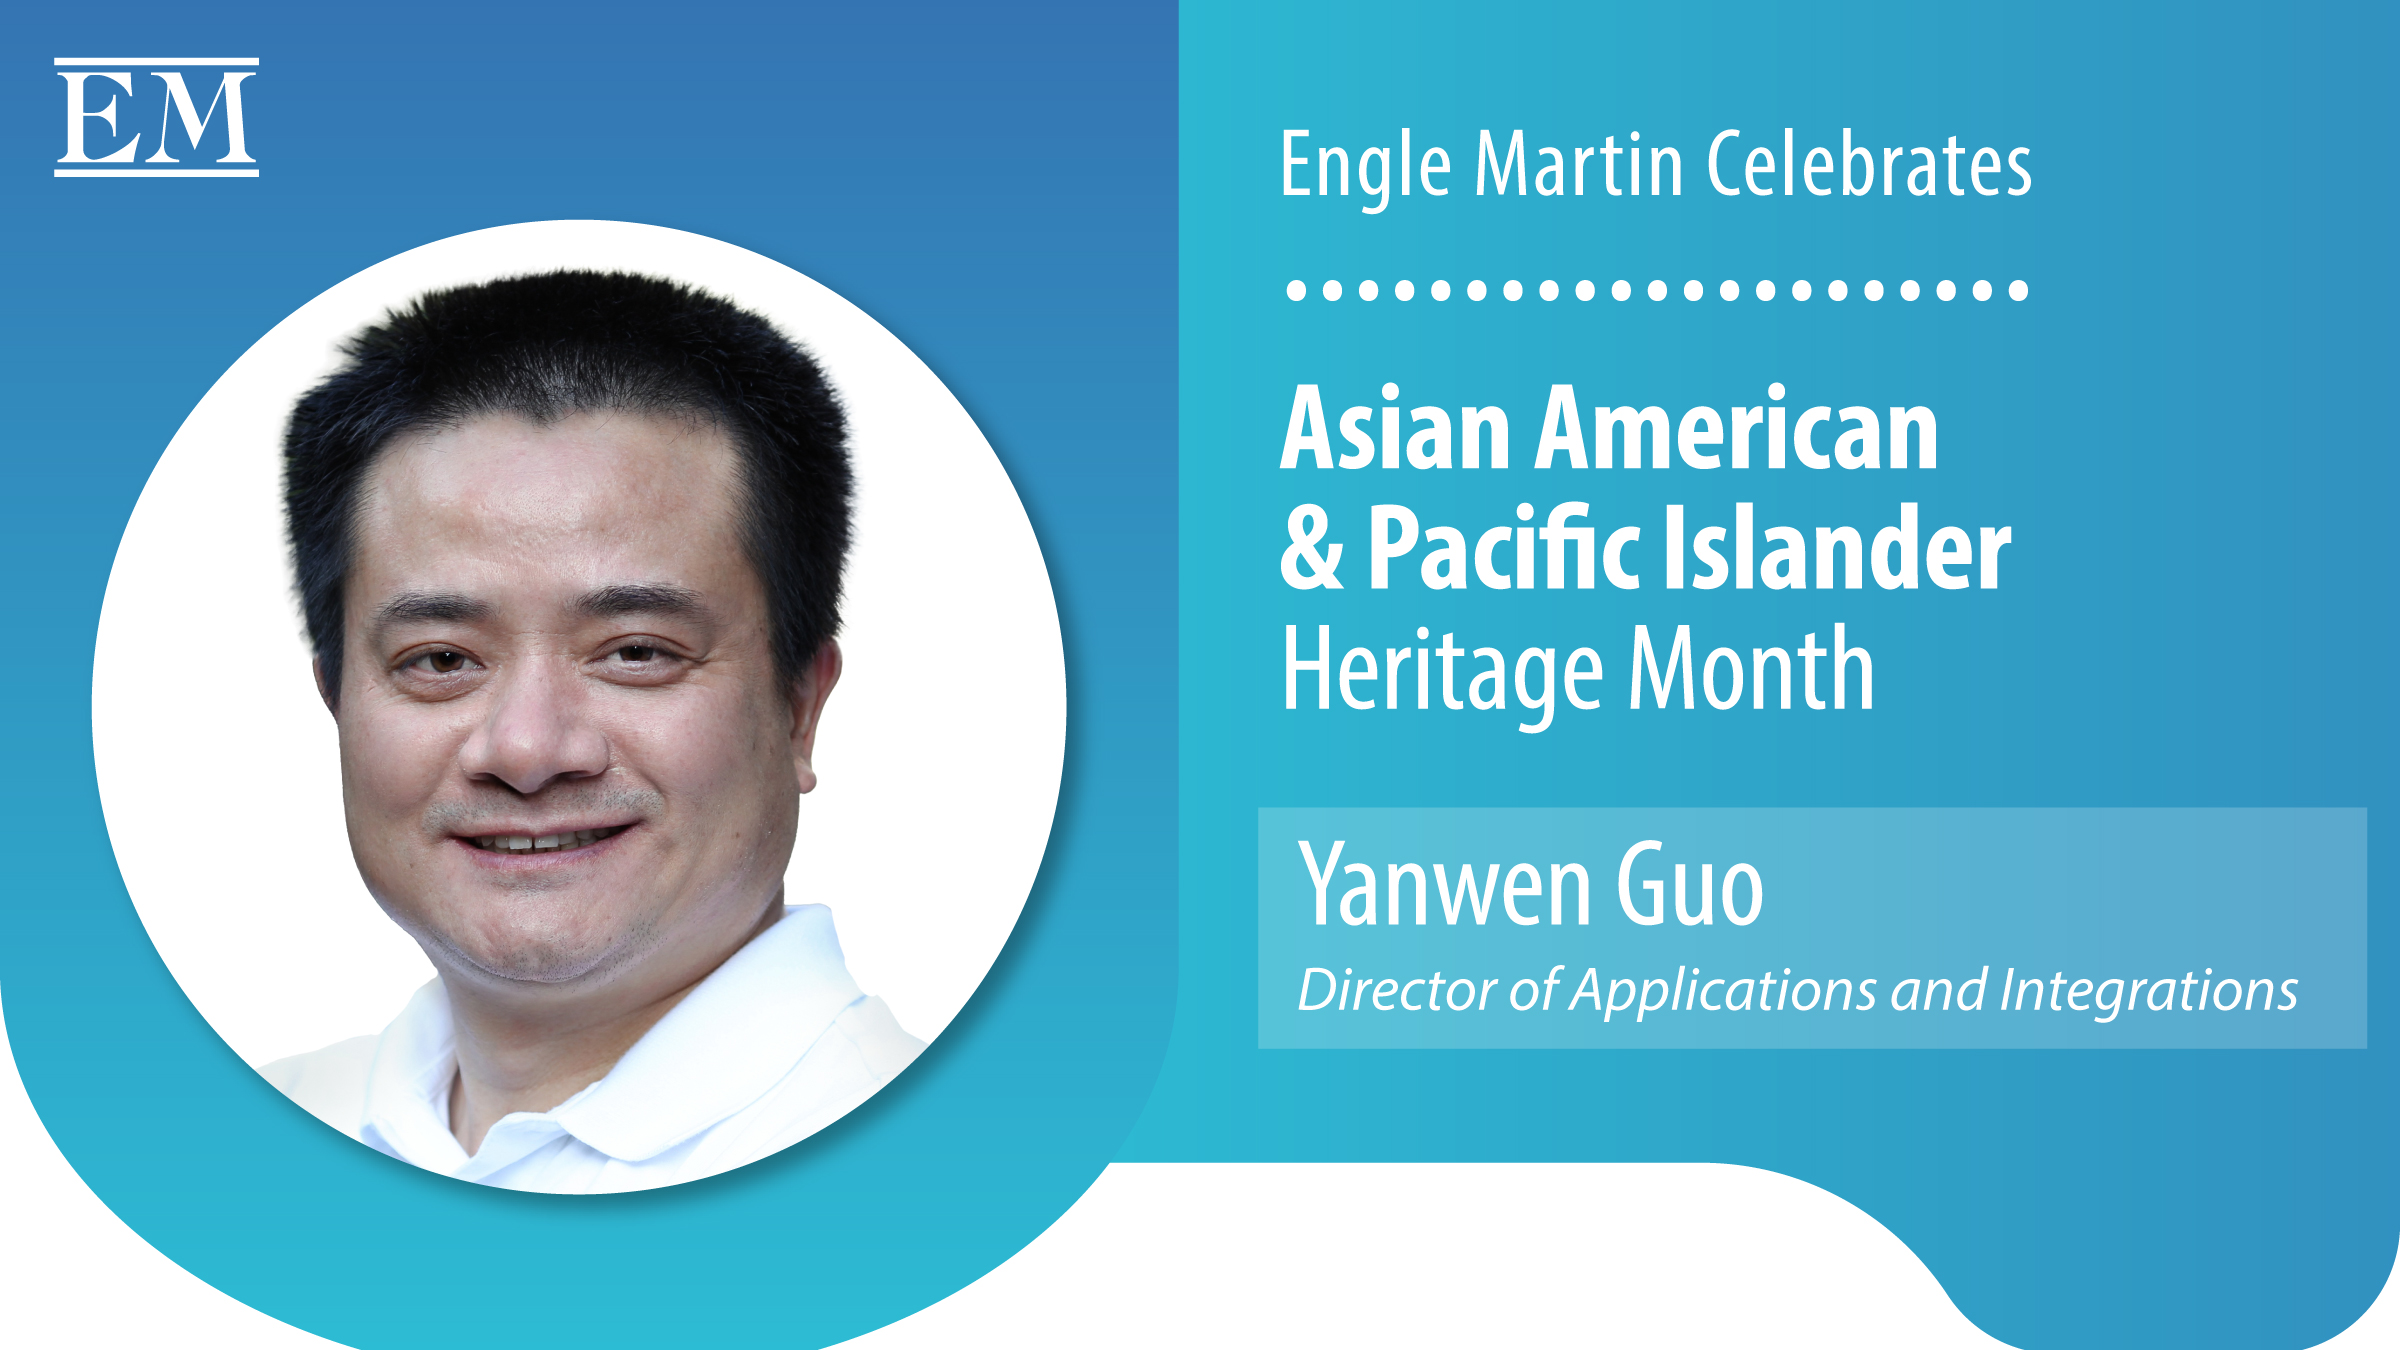 Engle Martin Celebrates Asian American & Pacific Islander Heritage Month!